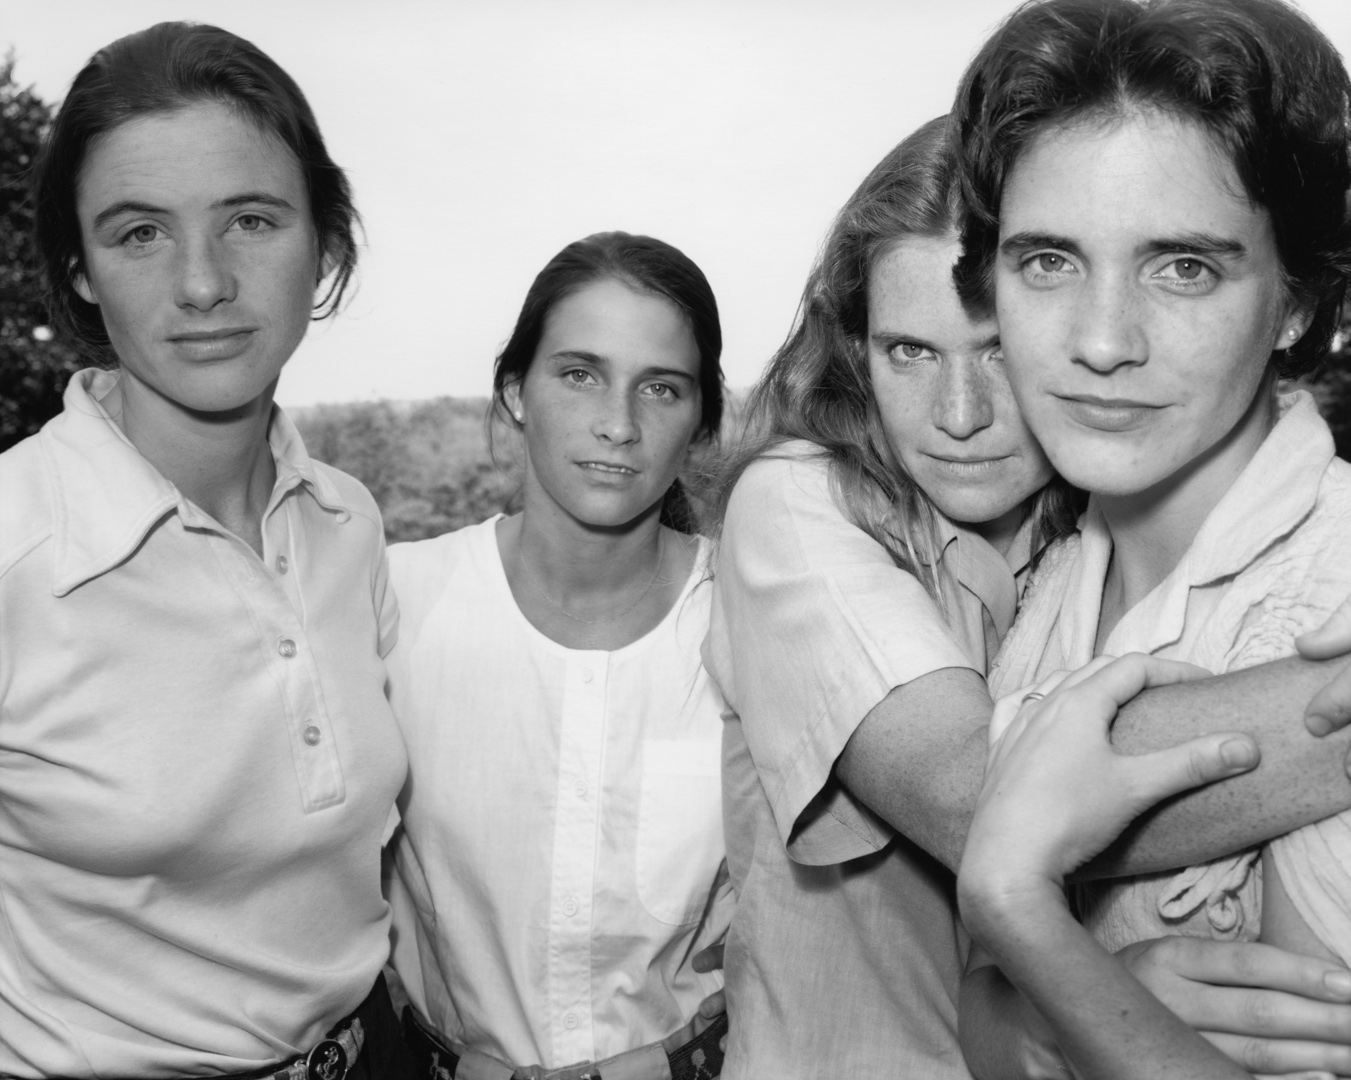 The Brown Sisters, Greenwich, Rhode Island, 1980